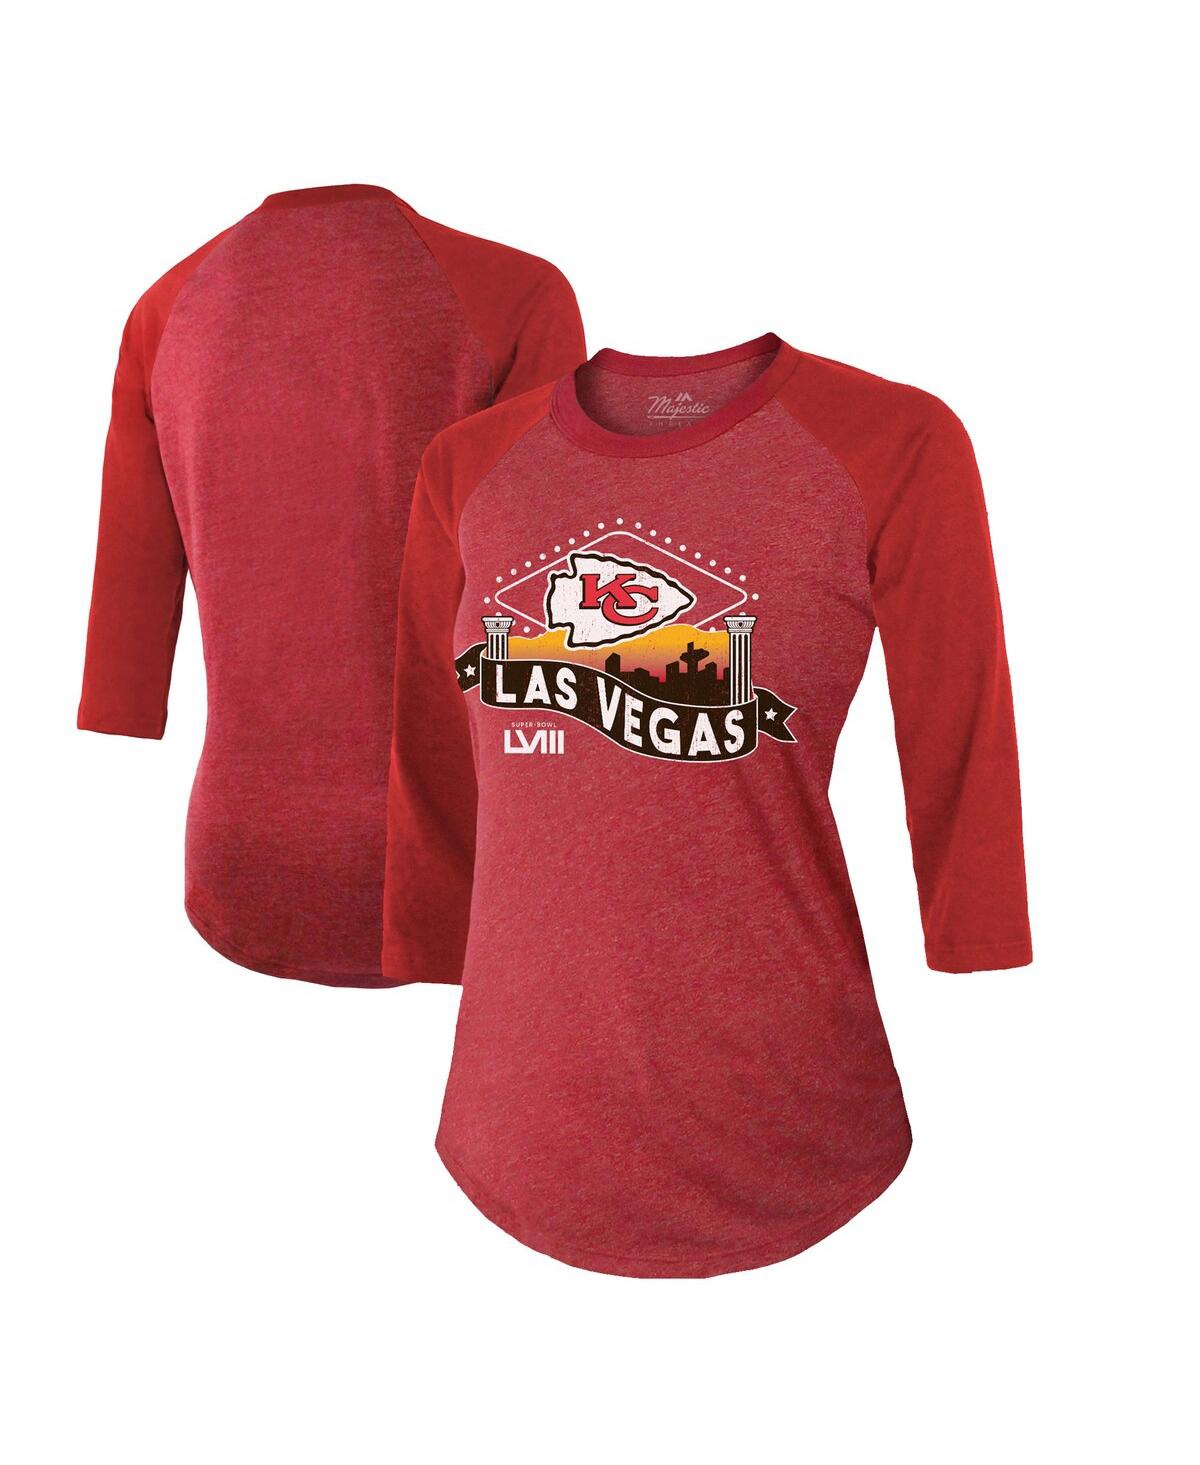 Women's Majestic Threads Red Kansas City Chiefs Super Bowl Lviii Vegas Raglan 3/4-Sleeve Tri-Blend T-shirt - Red